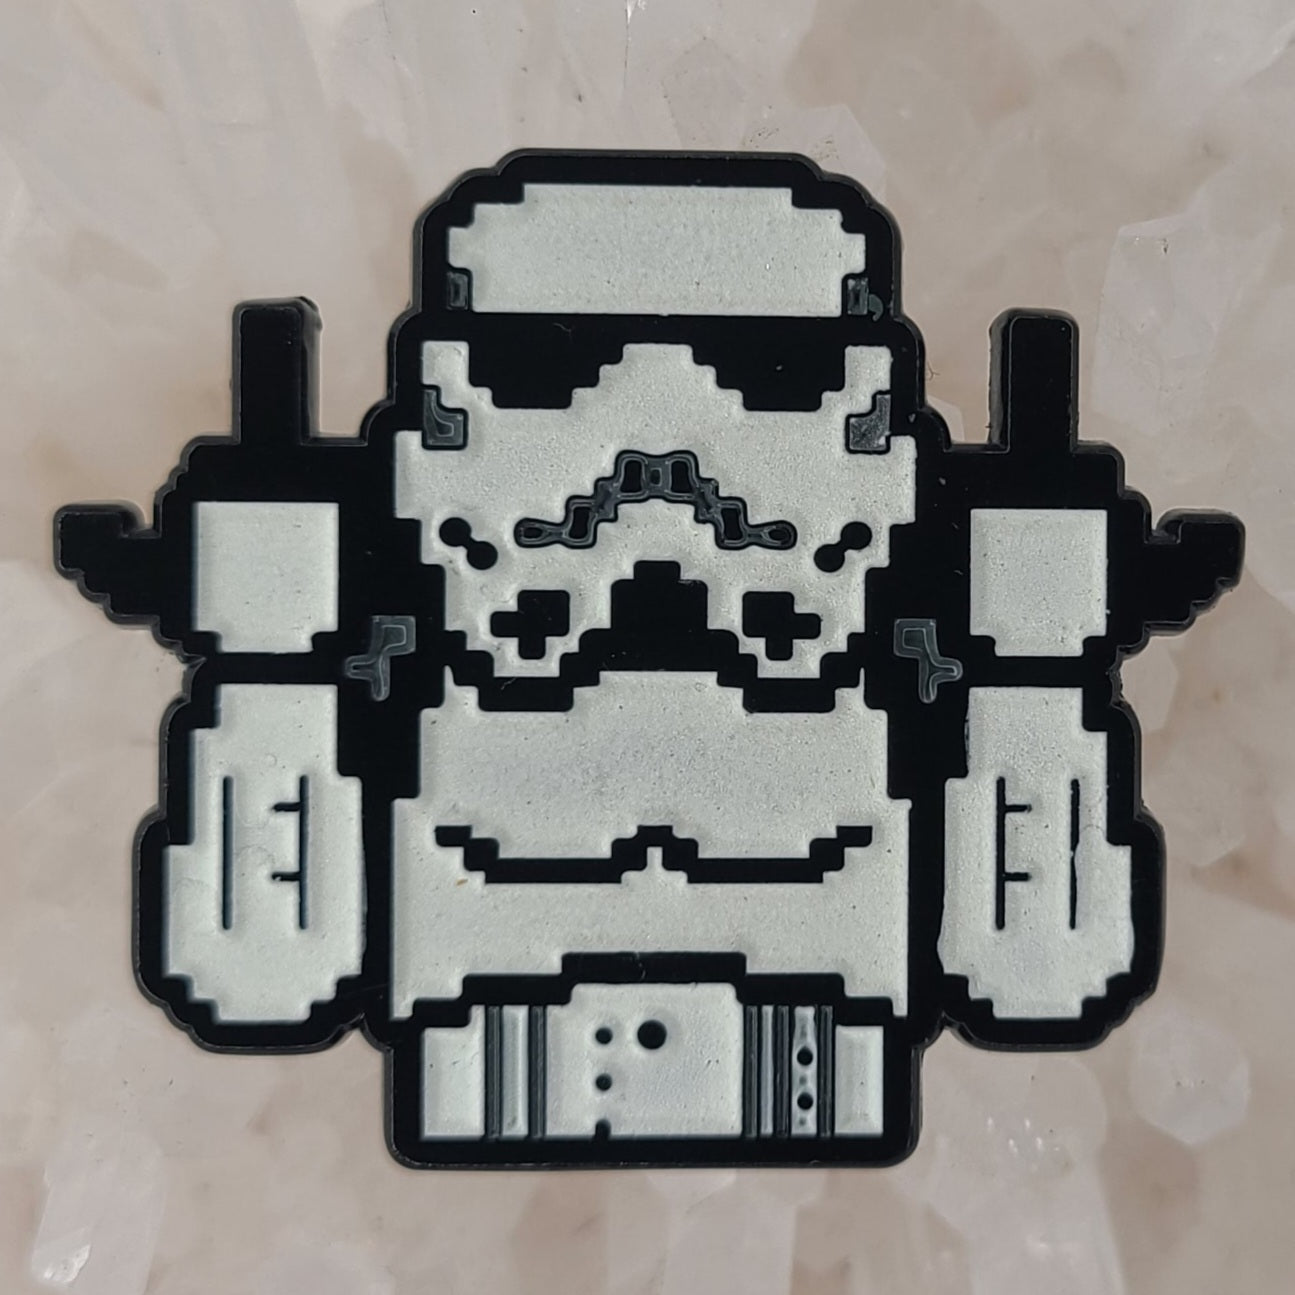 Fuck Off Storm Trooper Pixel 16 Bit Pin Wars Glow Enamel Pins Hat Pins Lapel Pin Brooch Badge Festival Pin